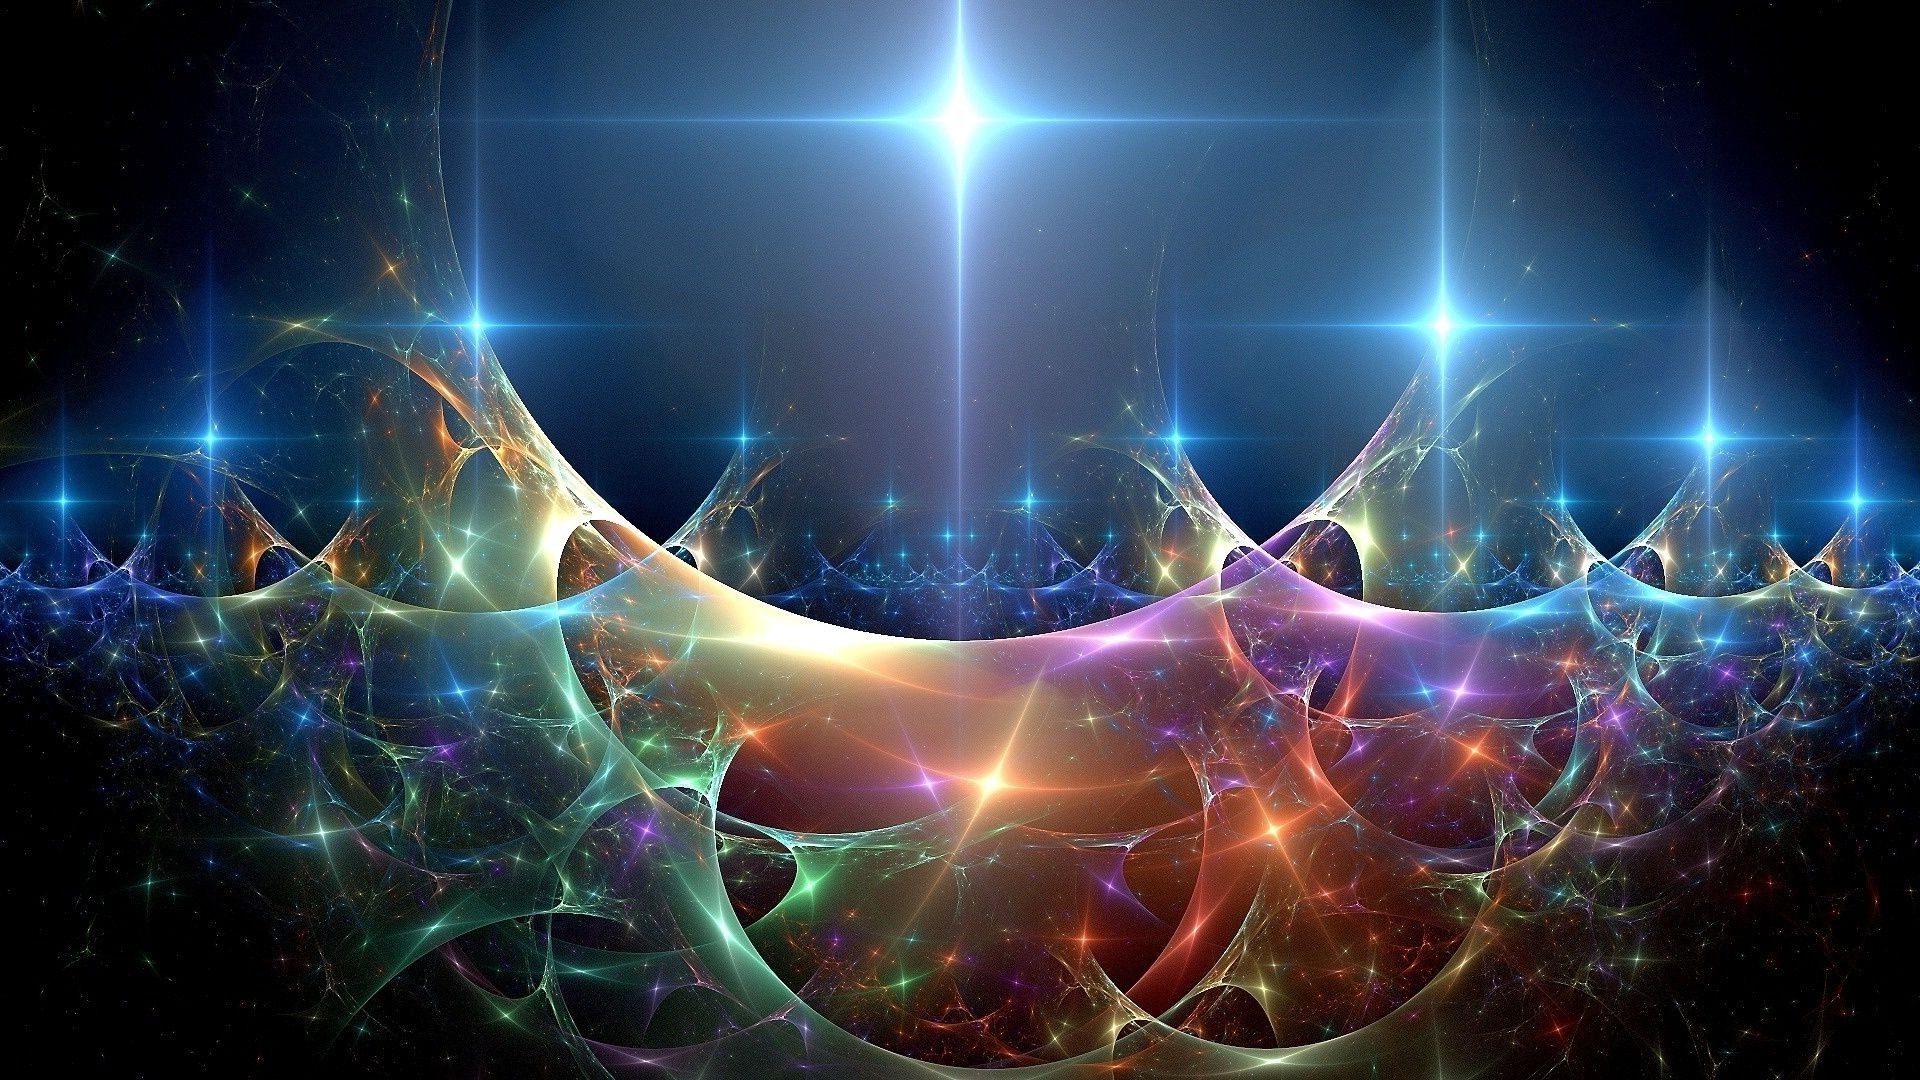 abstract bright design energy motion dynamic fantasy fractal background wallpaper desktop light surreal element graphic